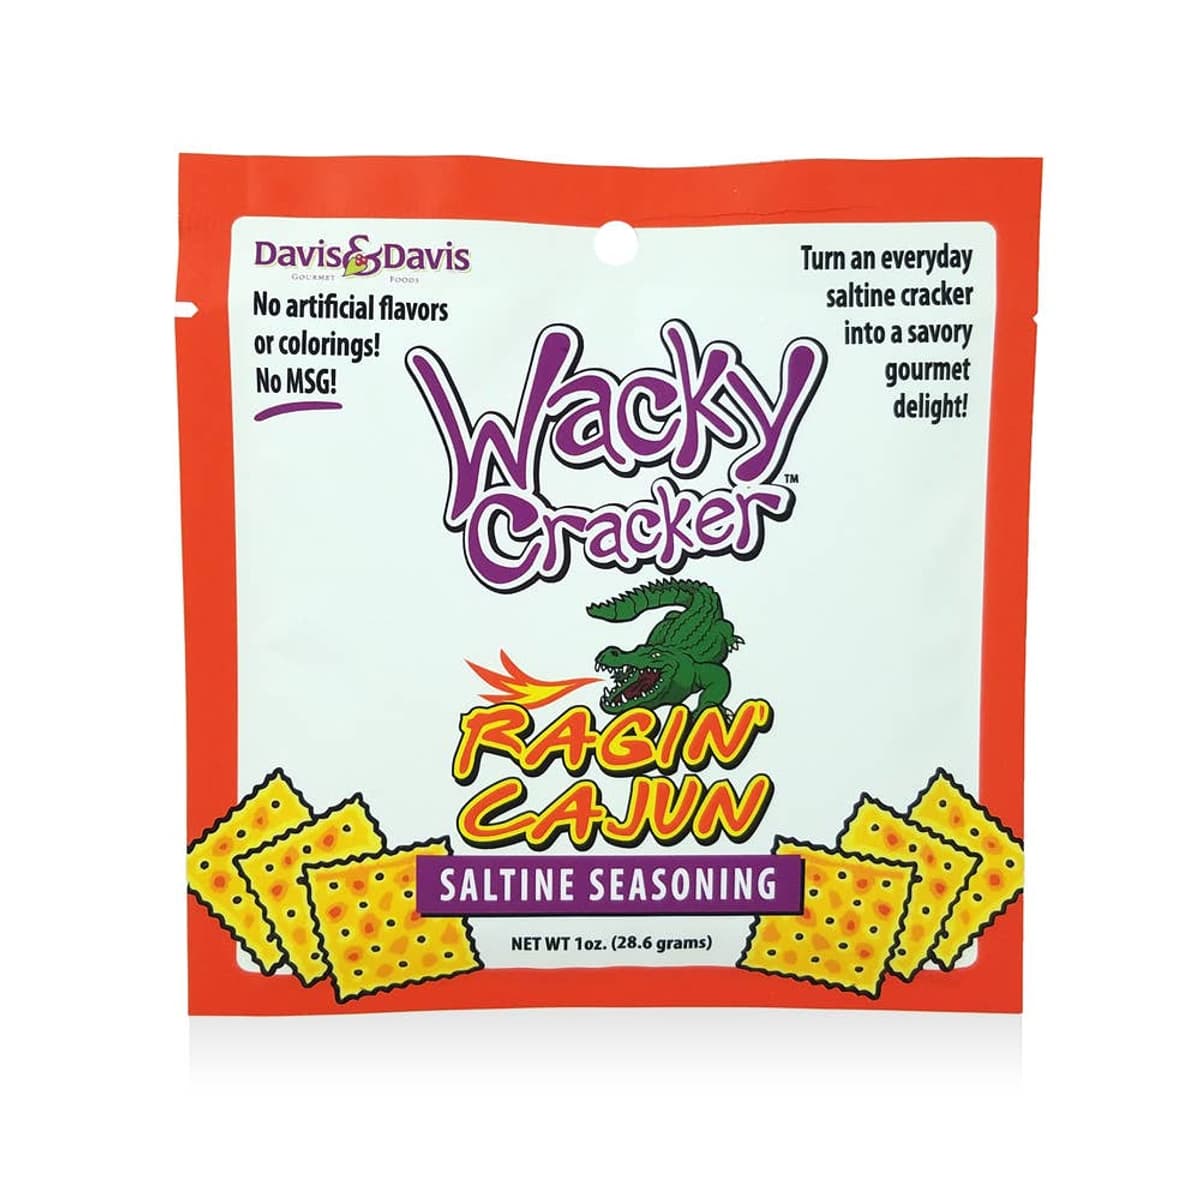 Wacky Cracker Seasoning